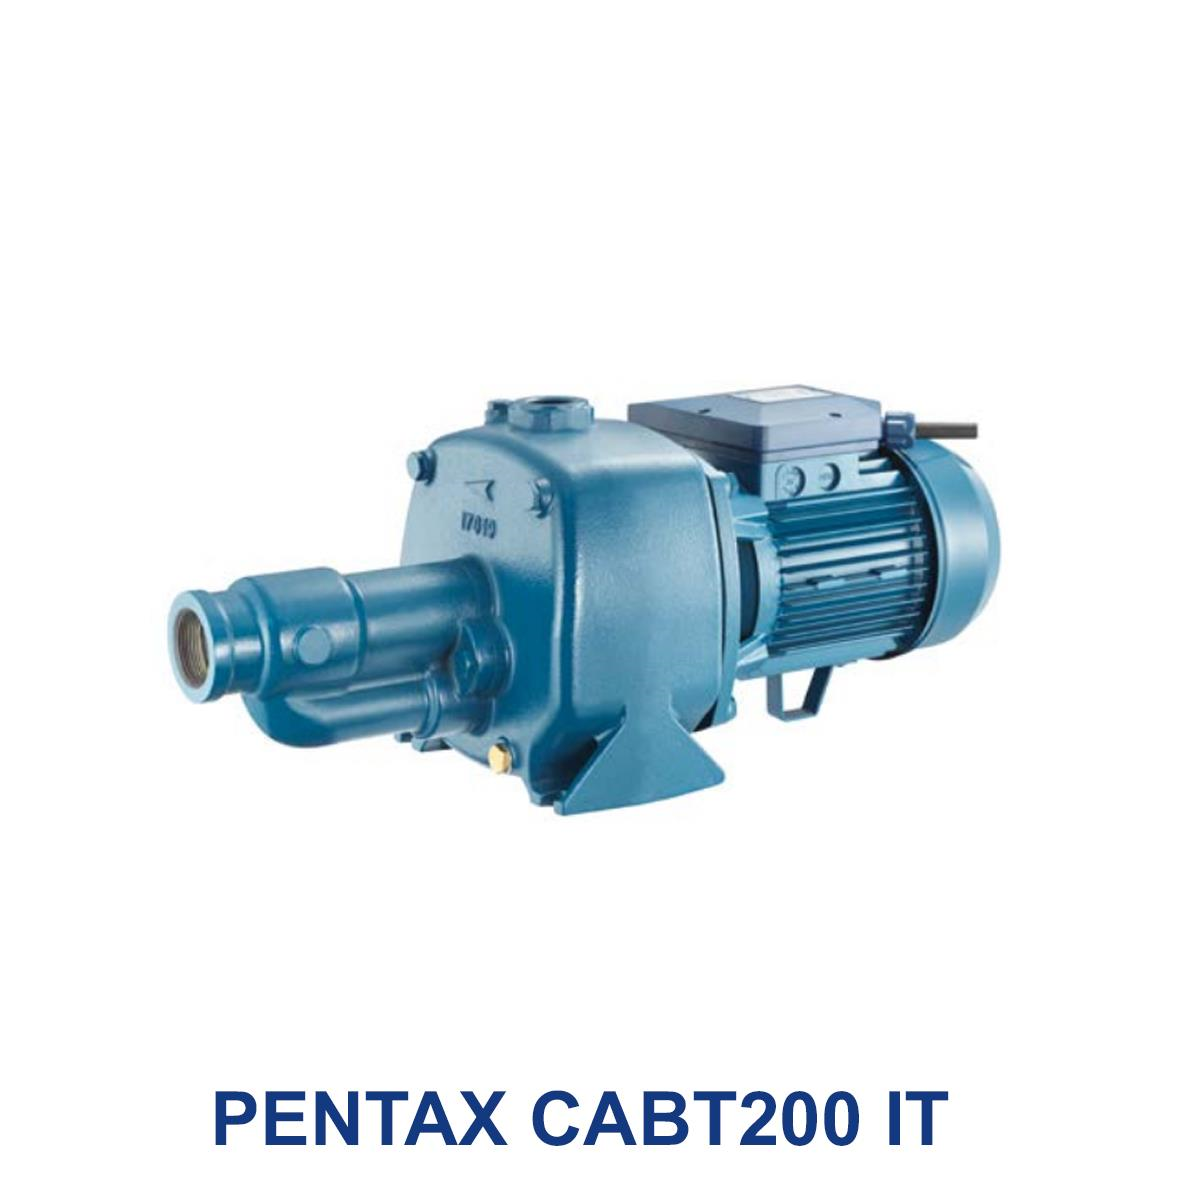 PENTAX-CABT200-IT